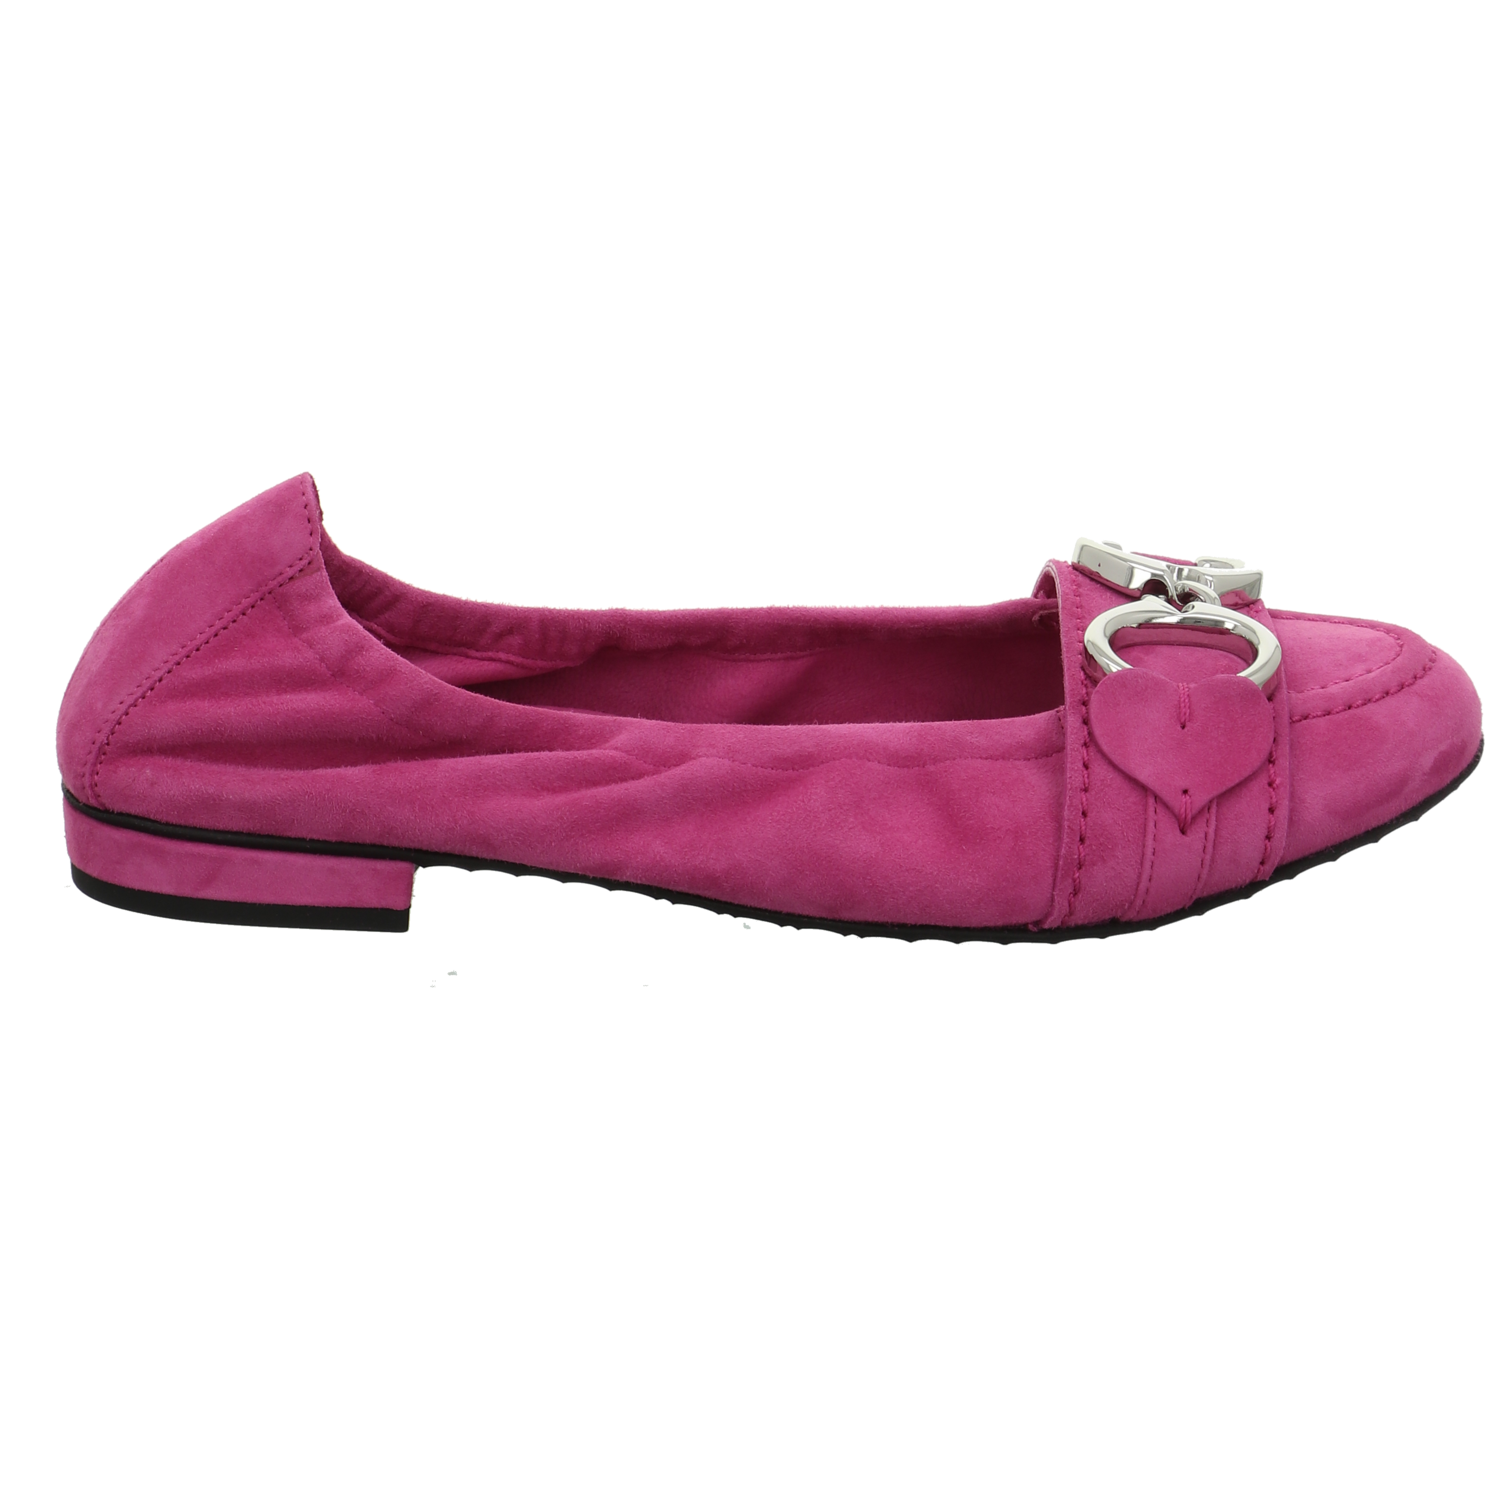 K + S shoes Pumps bis 25 mm pink / fuchsia